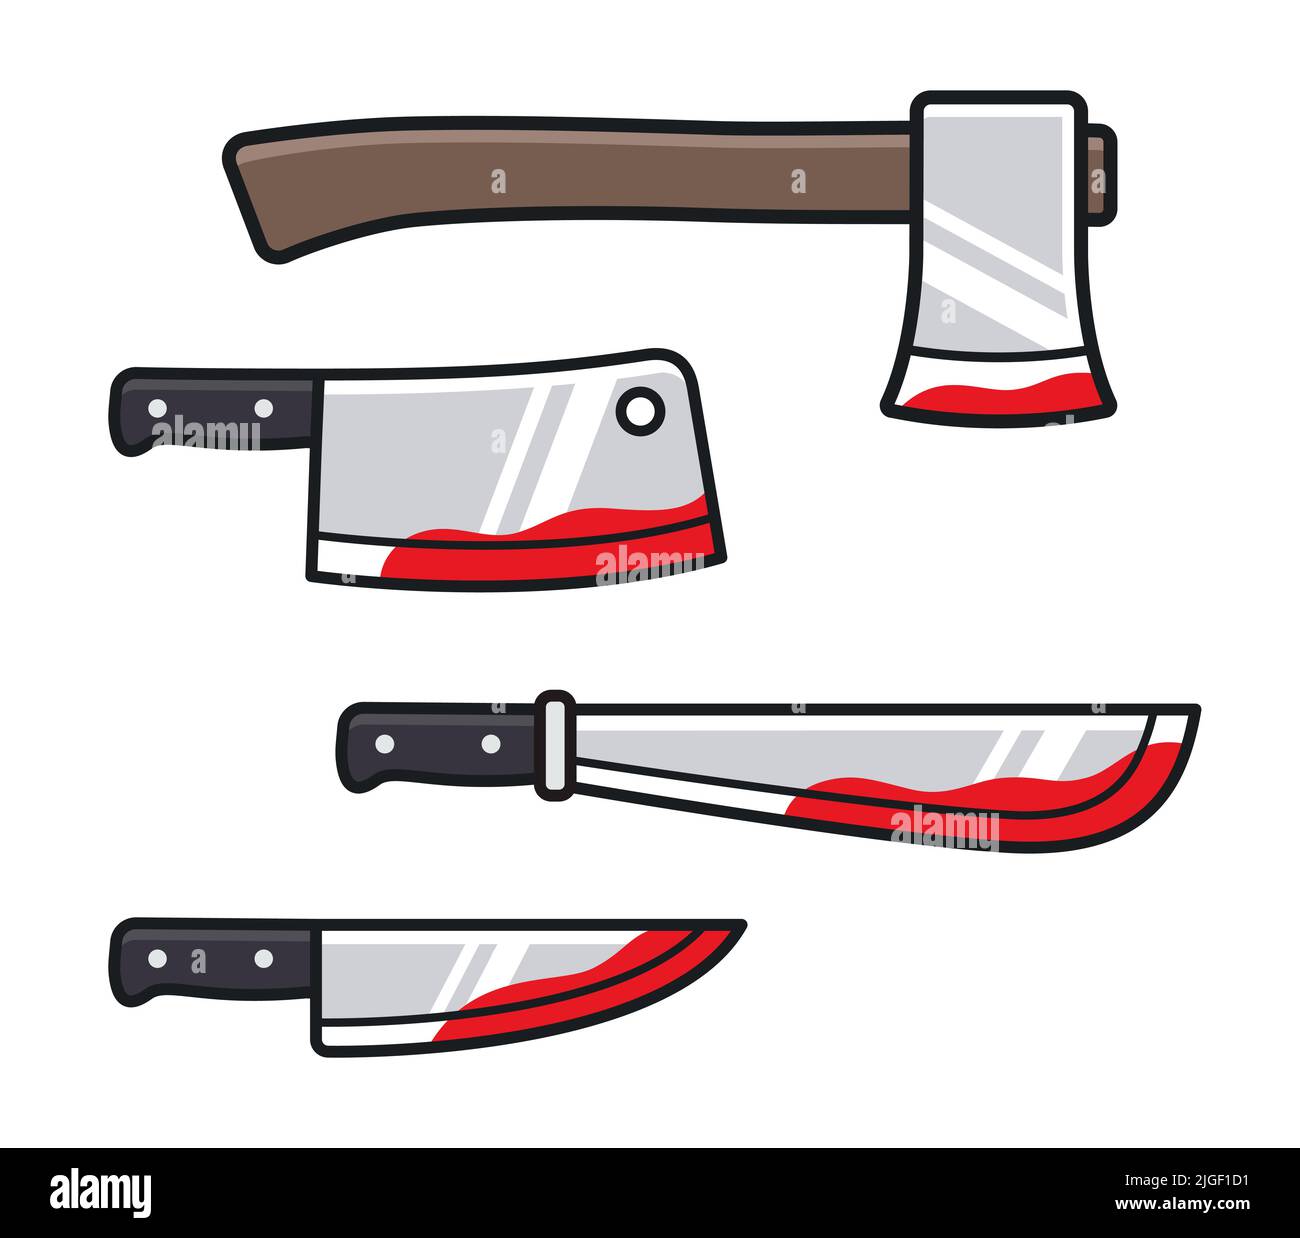 https://c8.alamy.com/comp/2JGF1D1/cartoon-bloody-cold-weapons-icon-set-kitchen-knife-cleaver-axe-machete-vector-clip-art-illustration-set-2JGF1D1.jpg